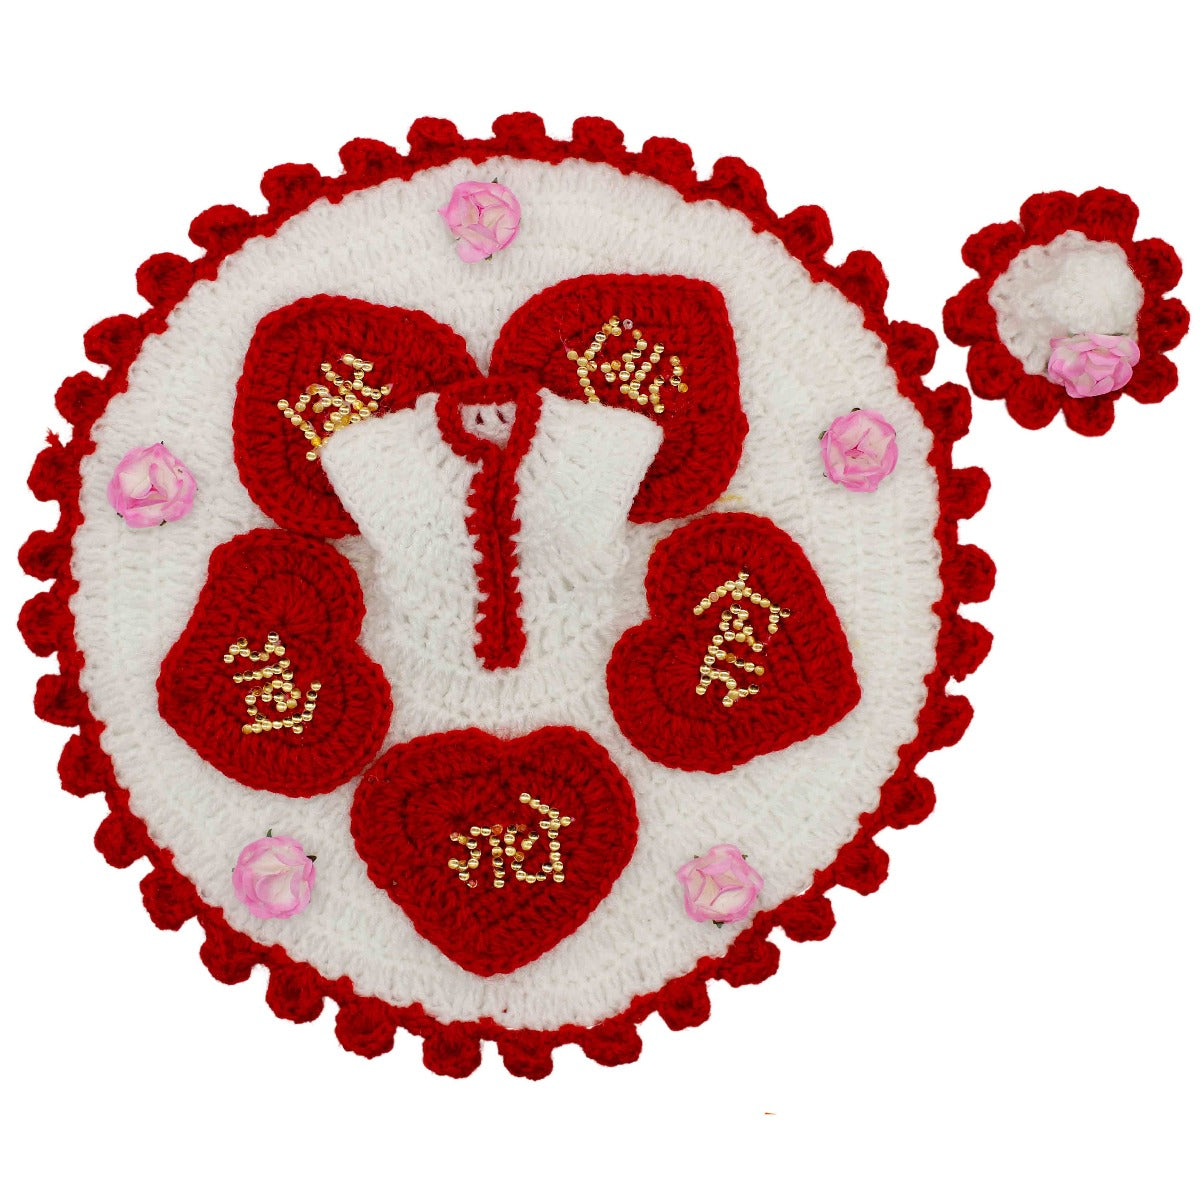 Radhey Printed Heart Woollen Dress For Kanha Ji